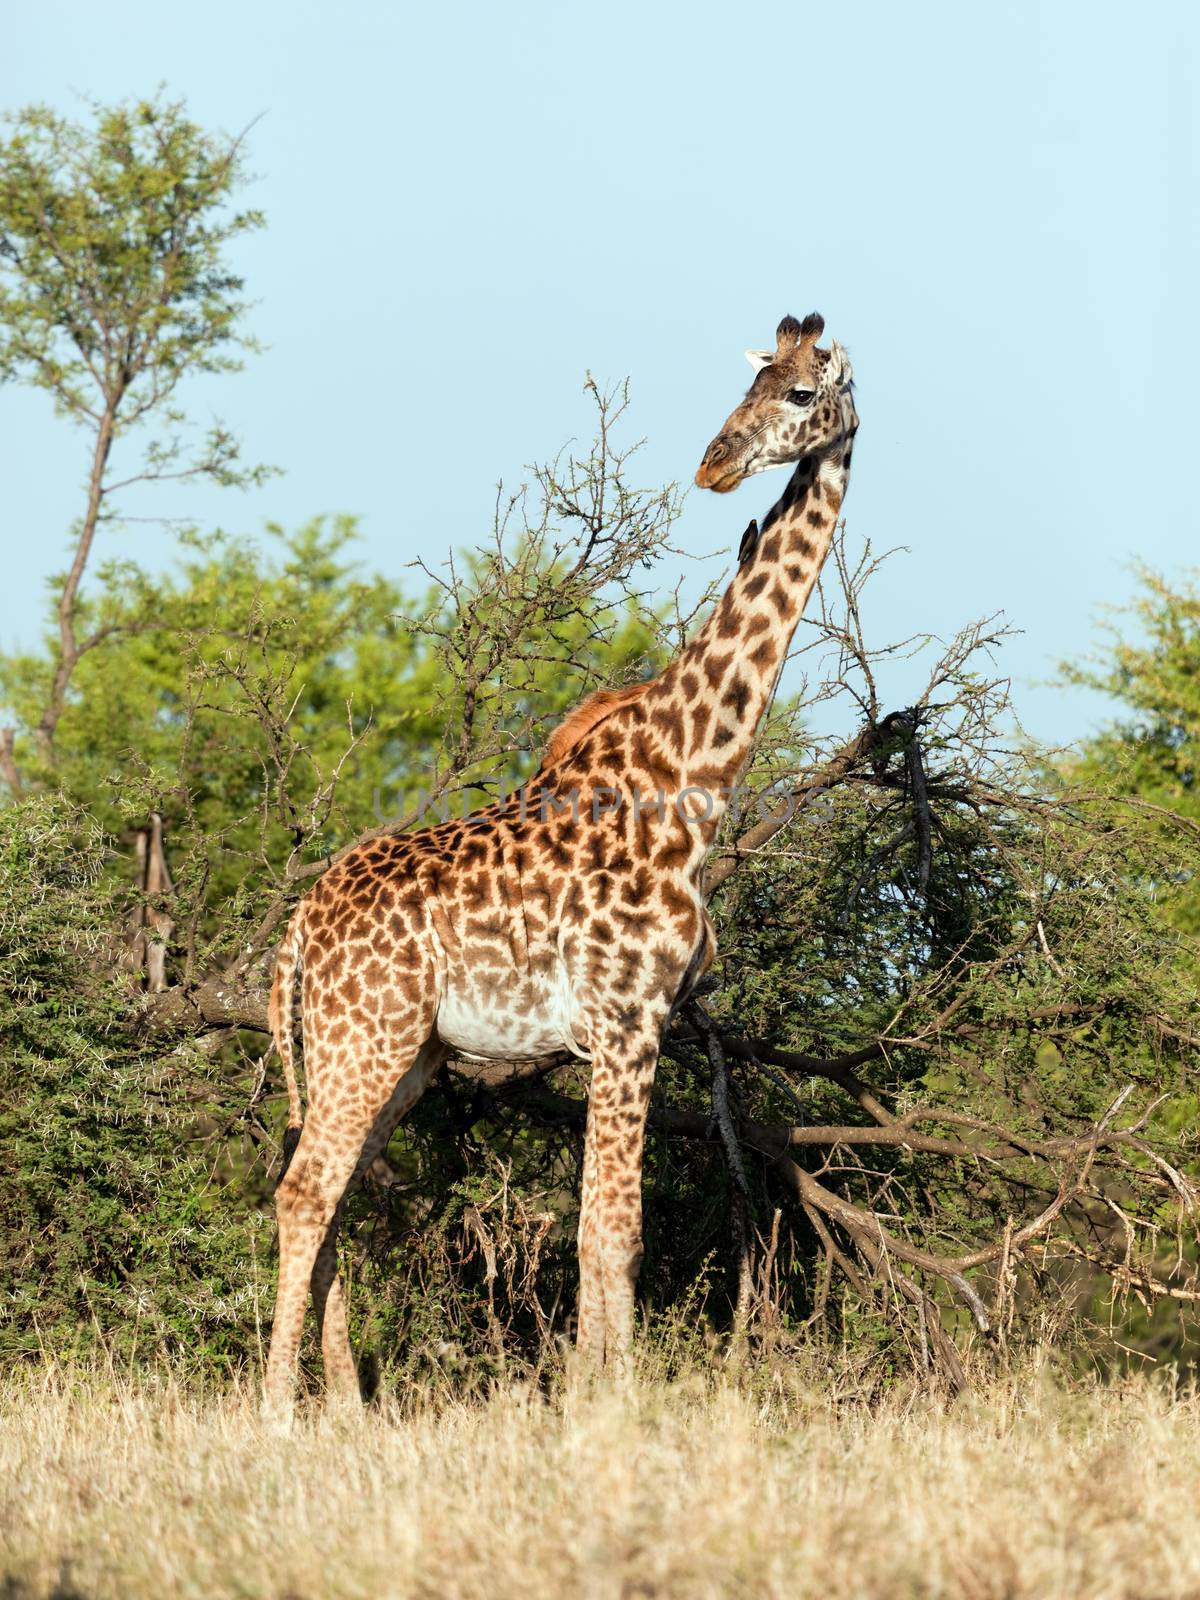 Giraffe on savanna, full view. Safari in Serengeti, Tanzania, Africa